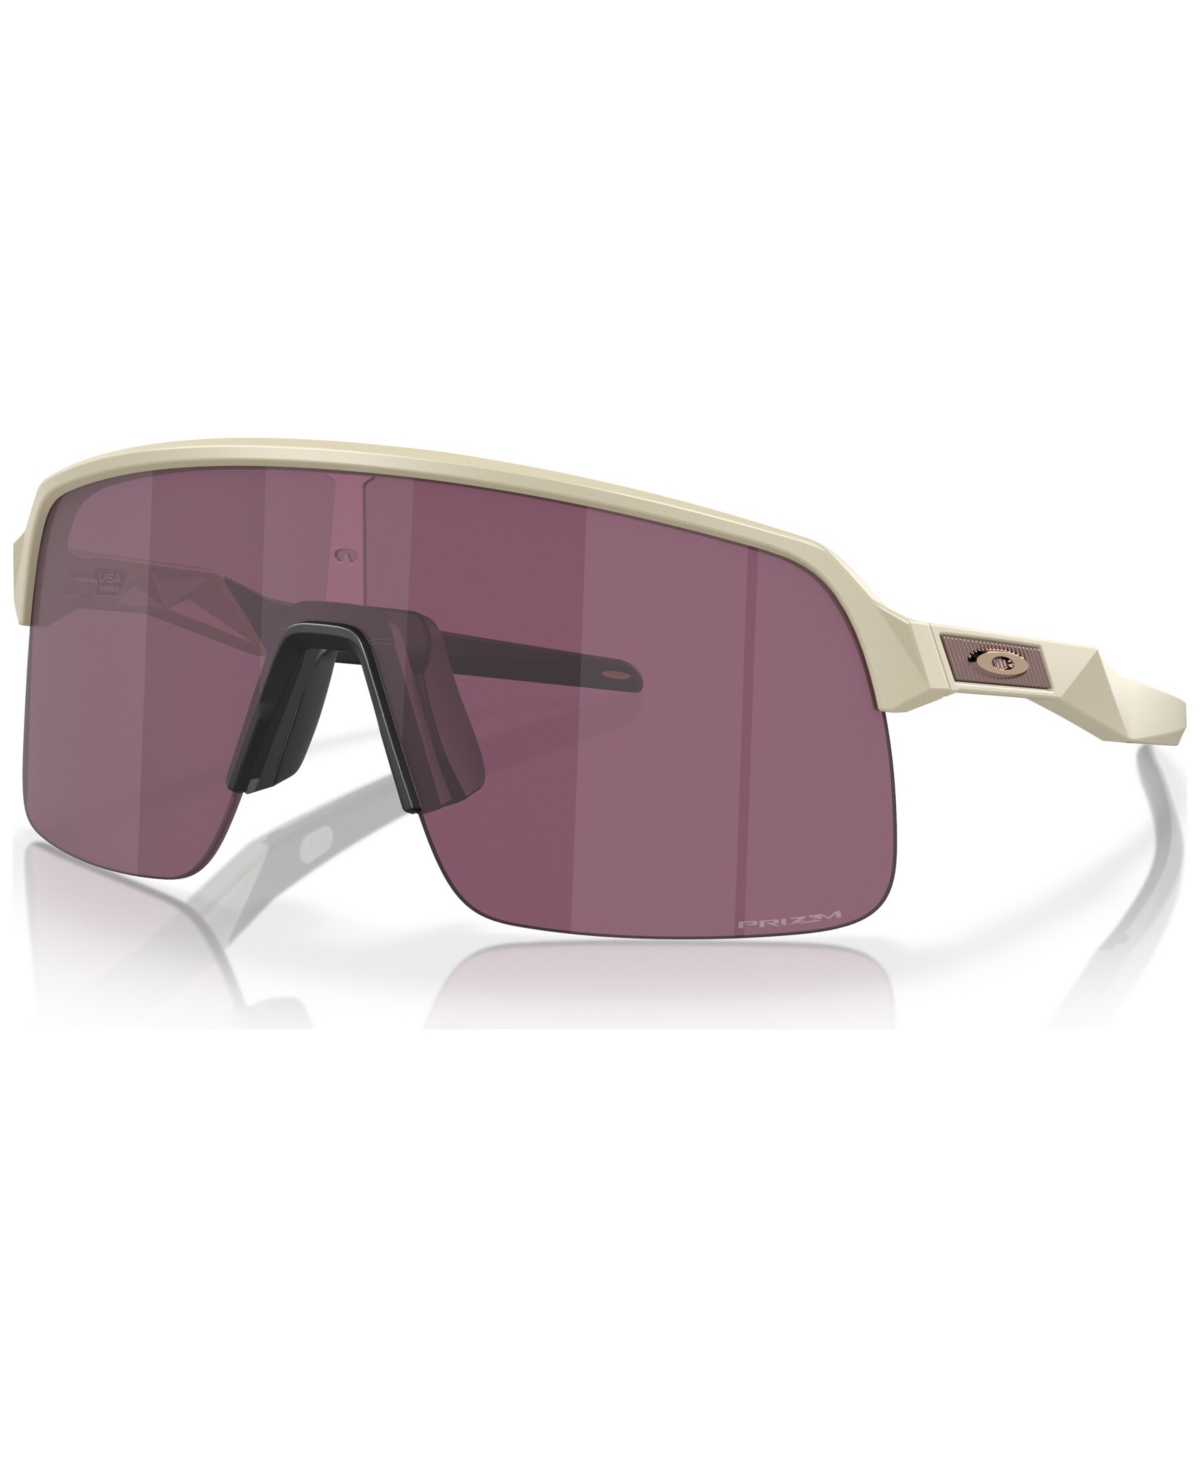 Men's Sutro Lite Sunglasses, Mirror OO9463 - Matte Sand